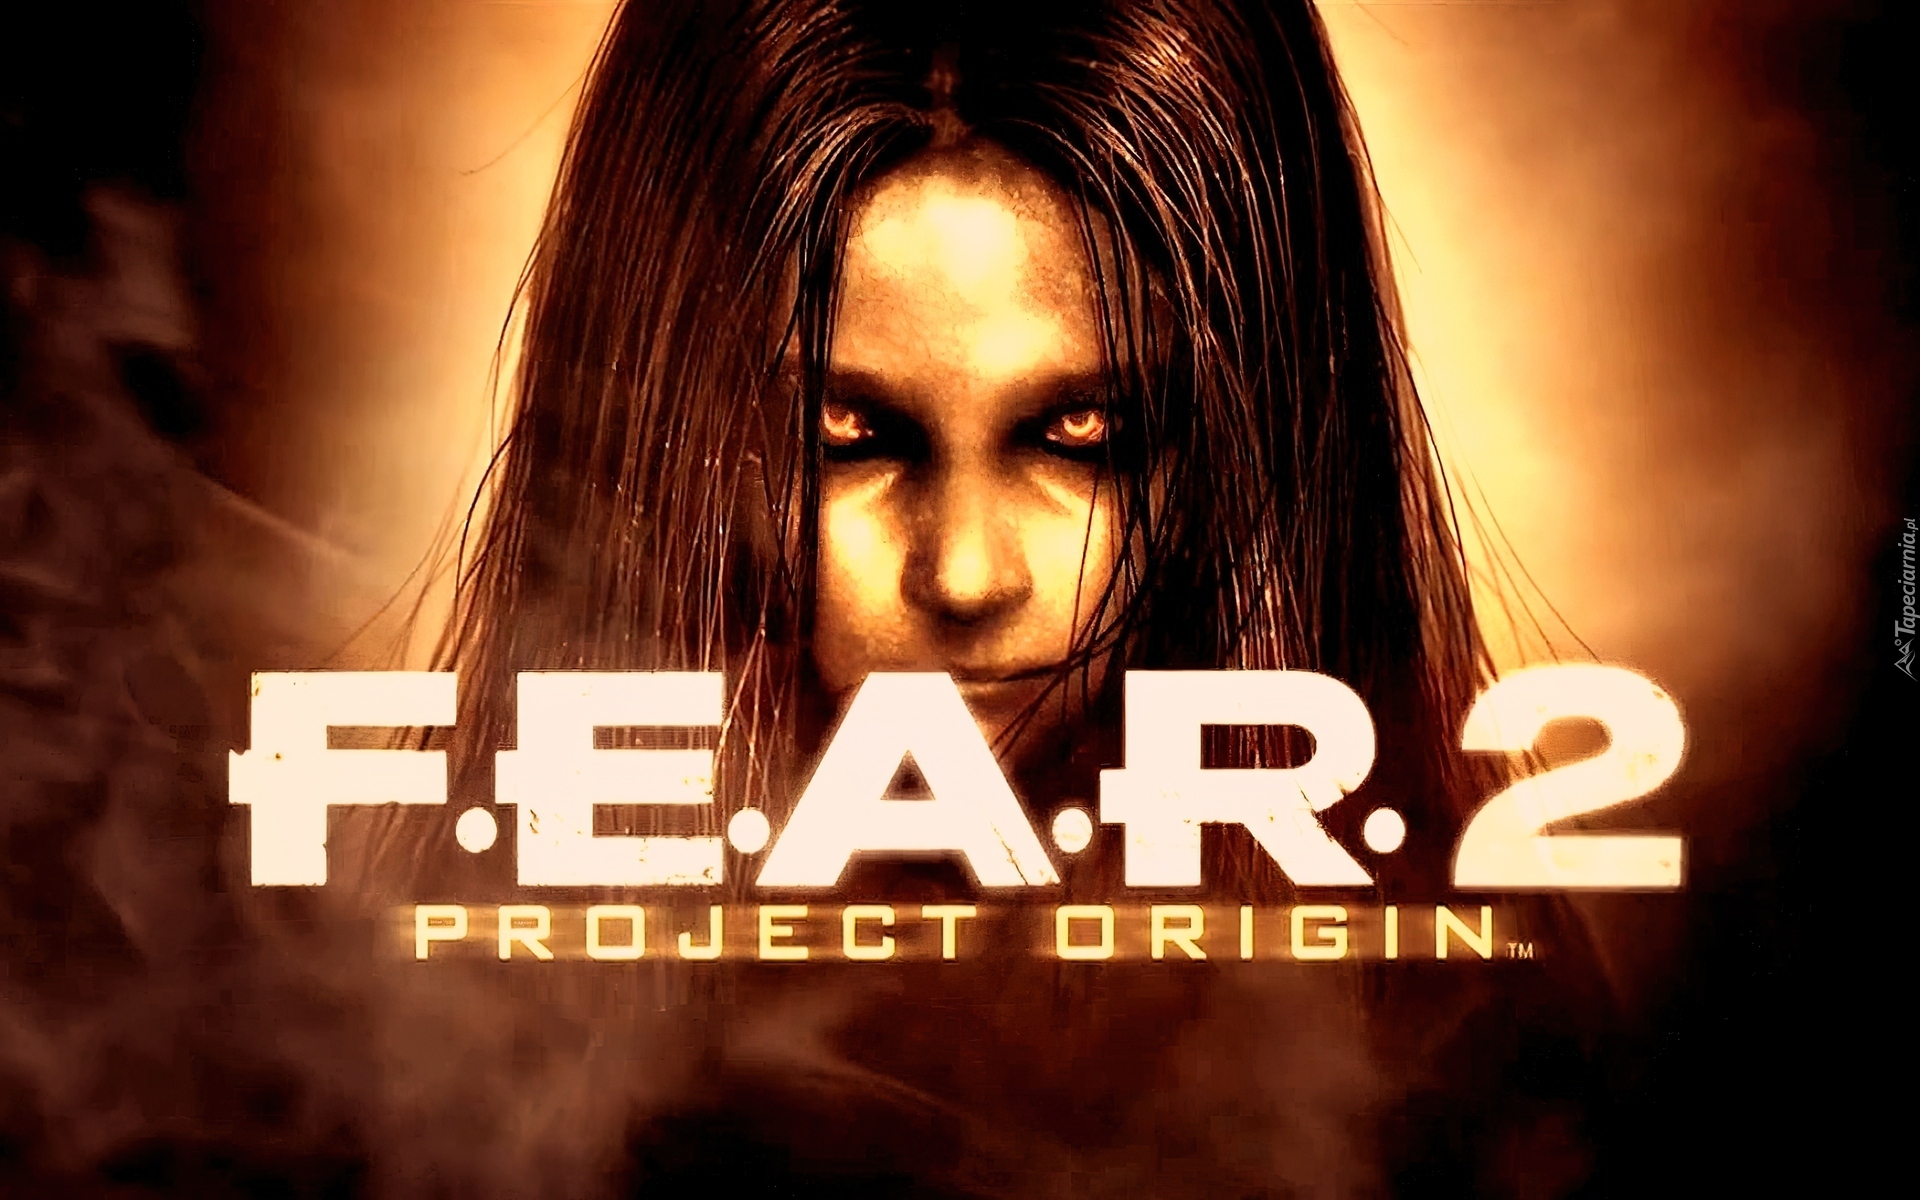 Kind fear. Fear 2 Project Origin Постер. F.E.A.R. 2 обложка. F.E.A.R. 2 Project Origin обложка.